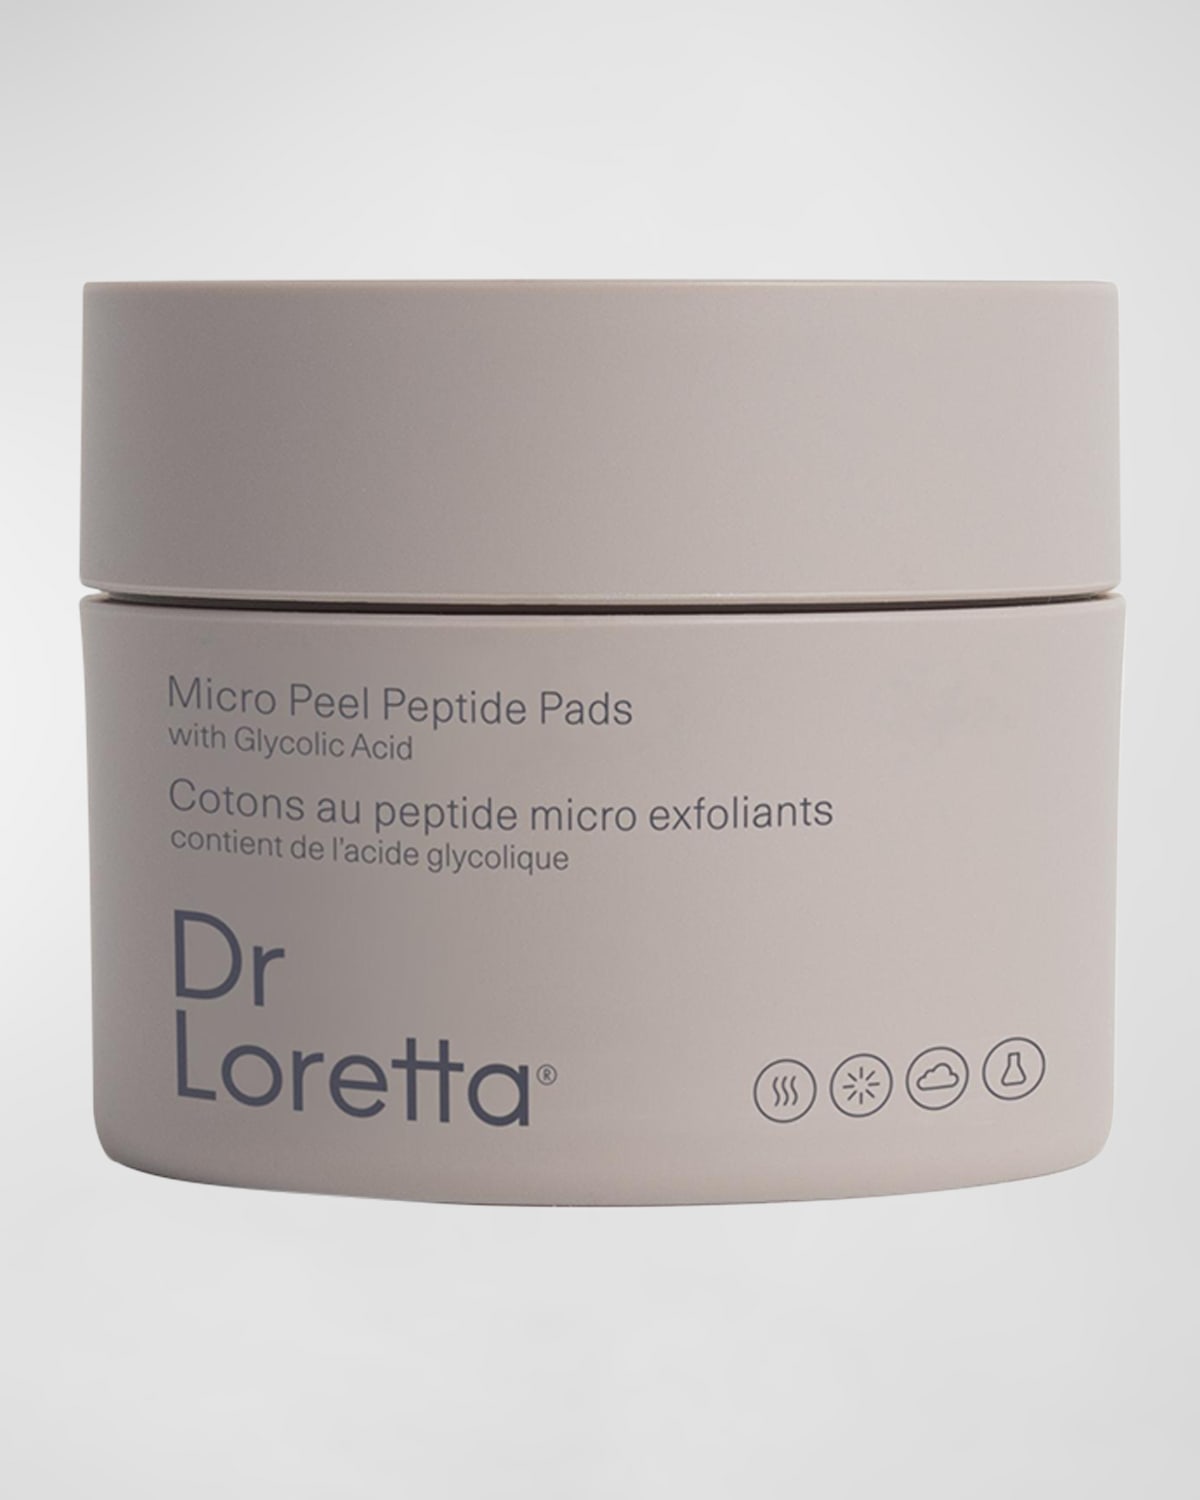 Dr. Loretta Micro Peel Peptide Pads